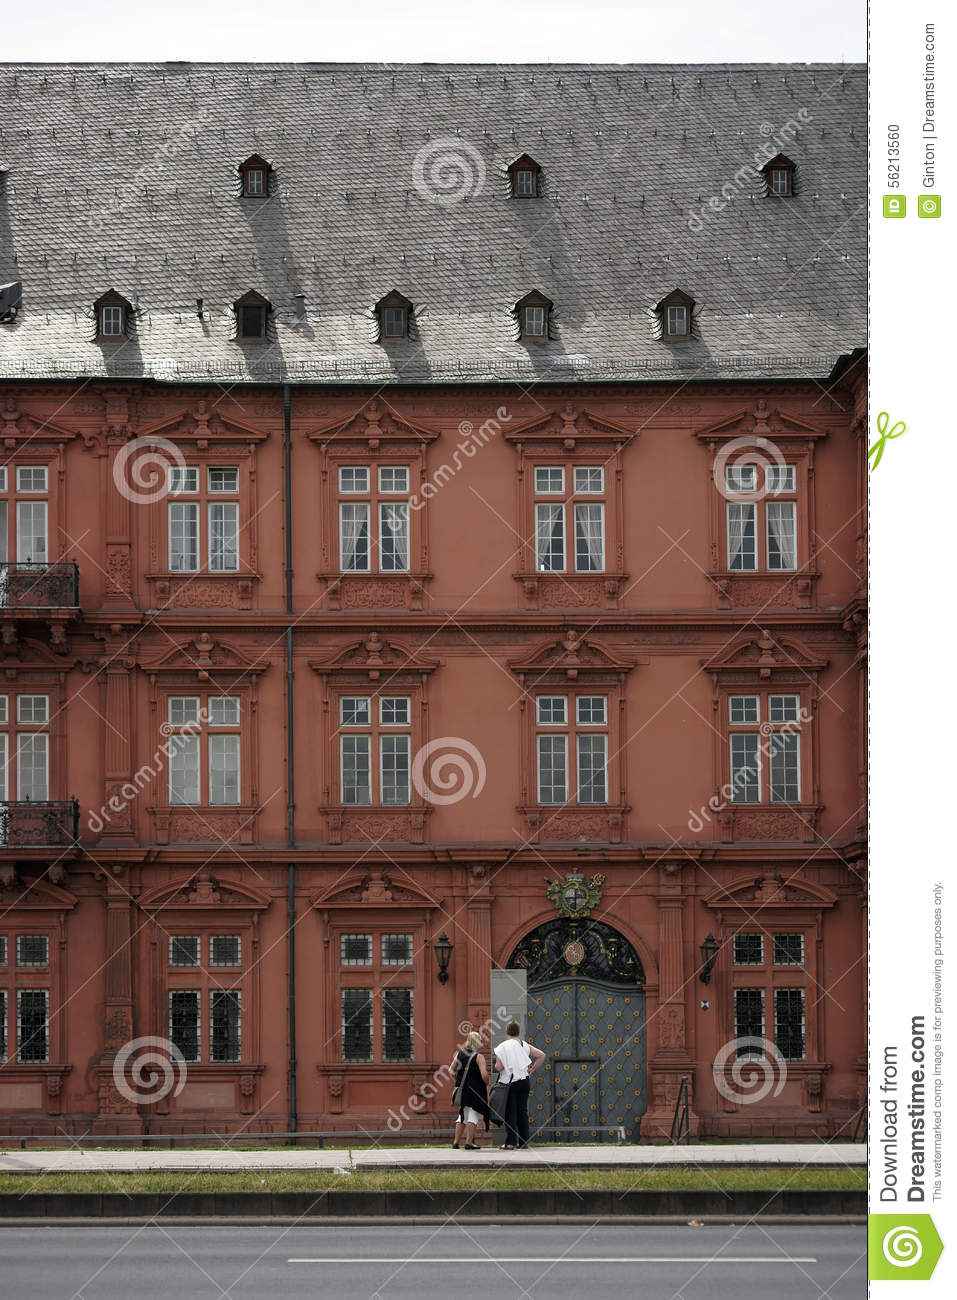 Electoral Palace, Mainz #19